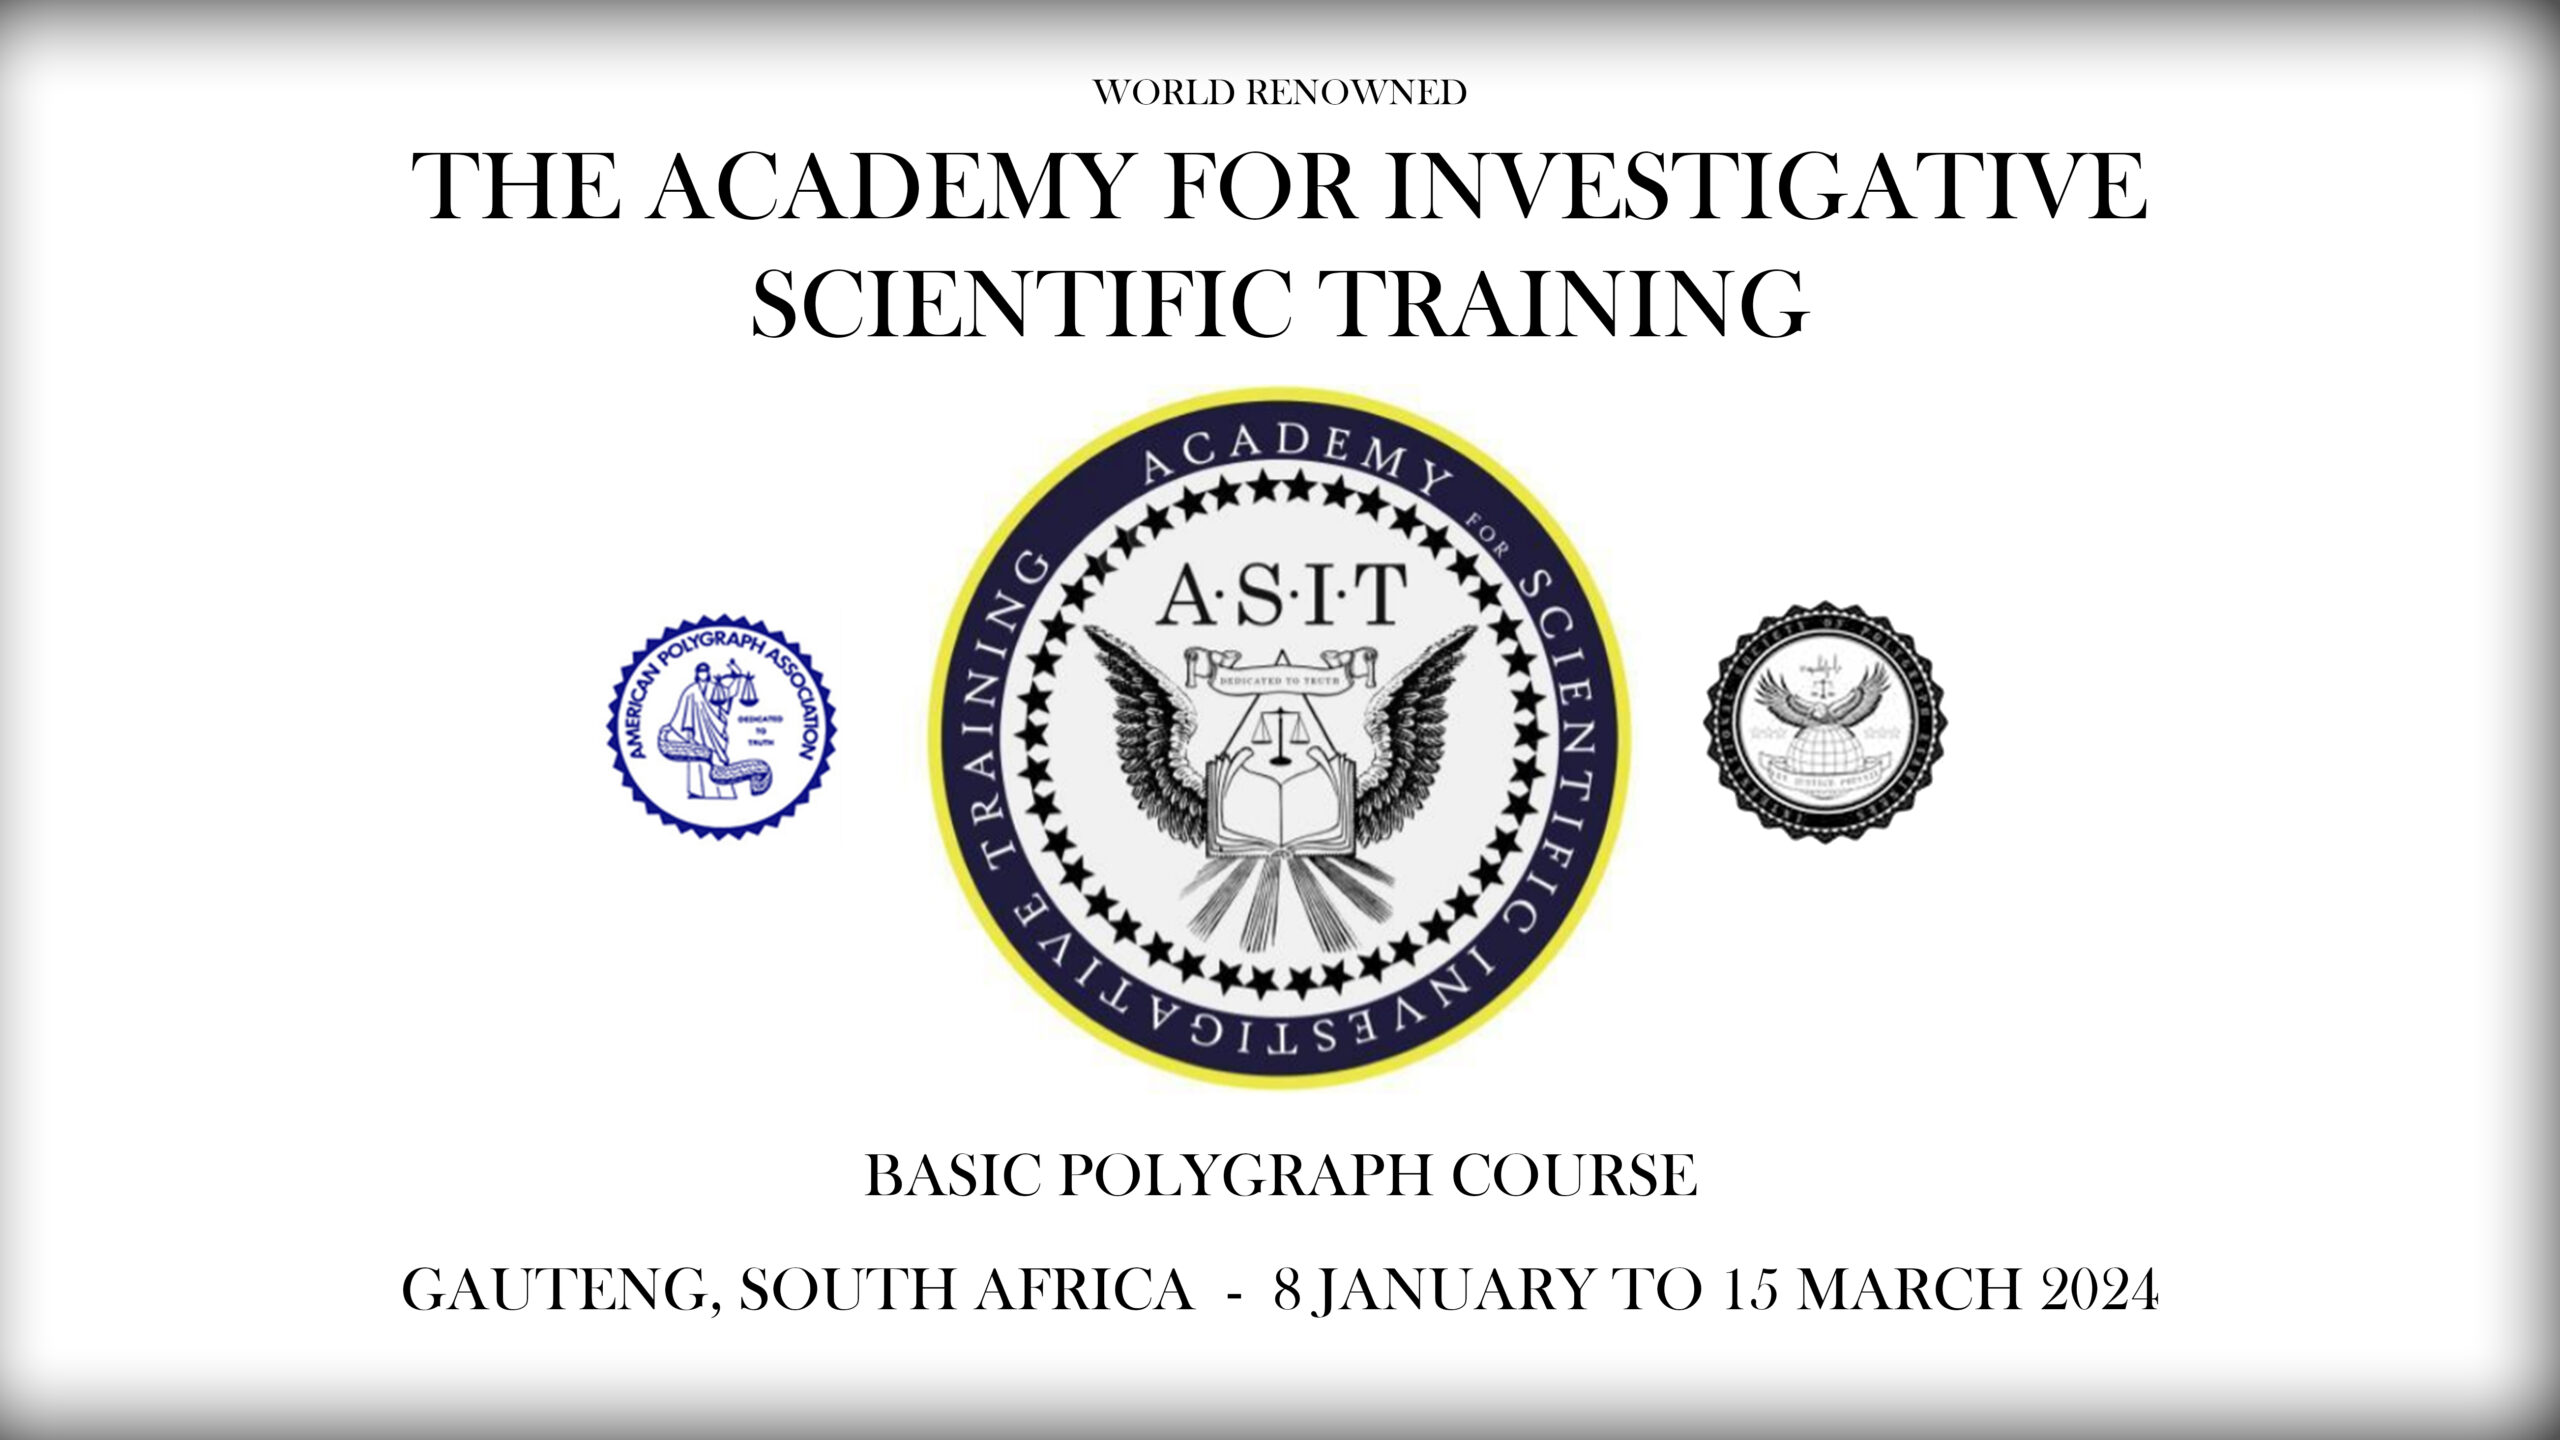 The Academy for Investigative Scientific Training